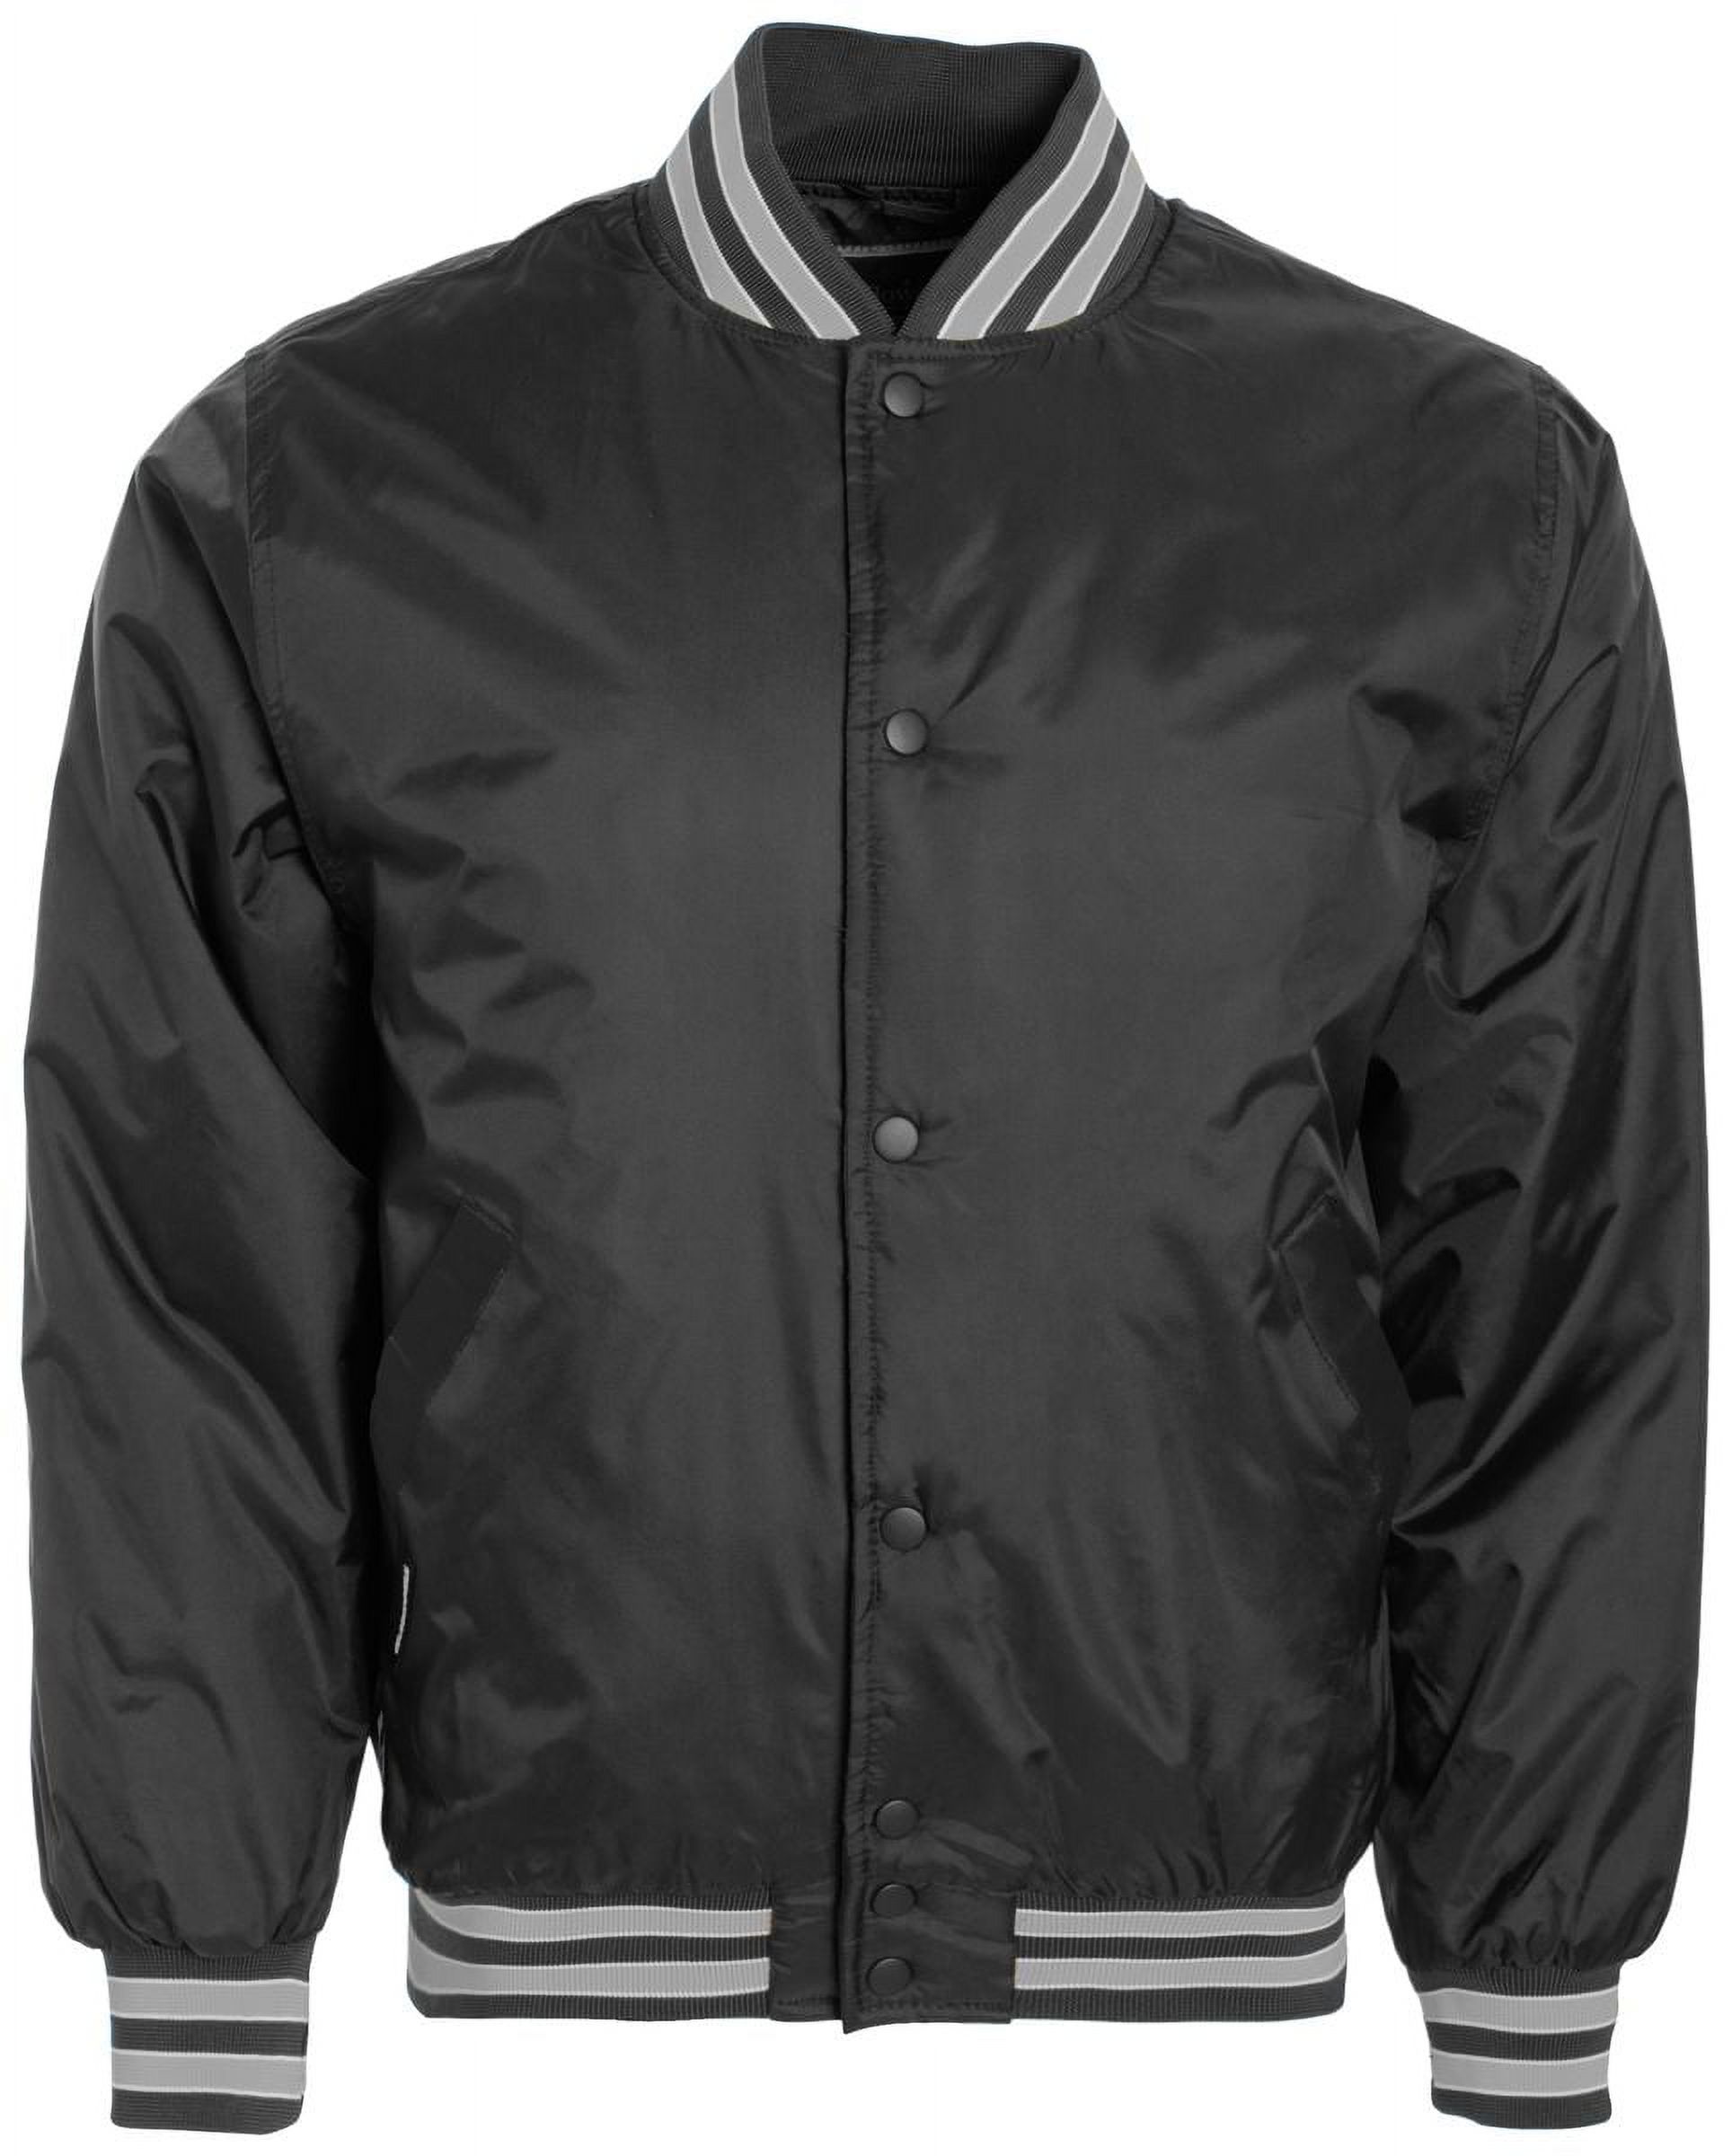 Holloway Sportswear L Heritage Jacket Black/White 229140 - image 2 of 4